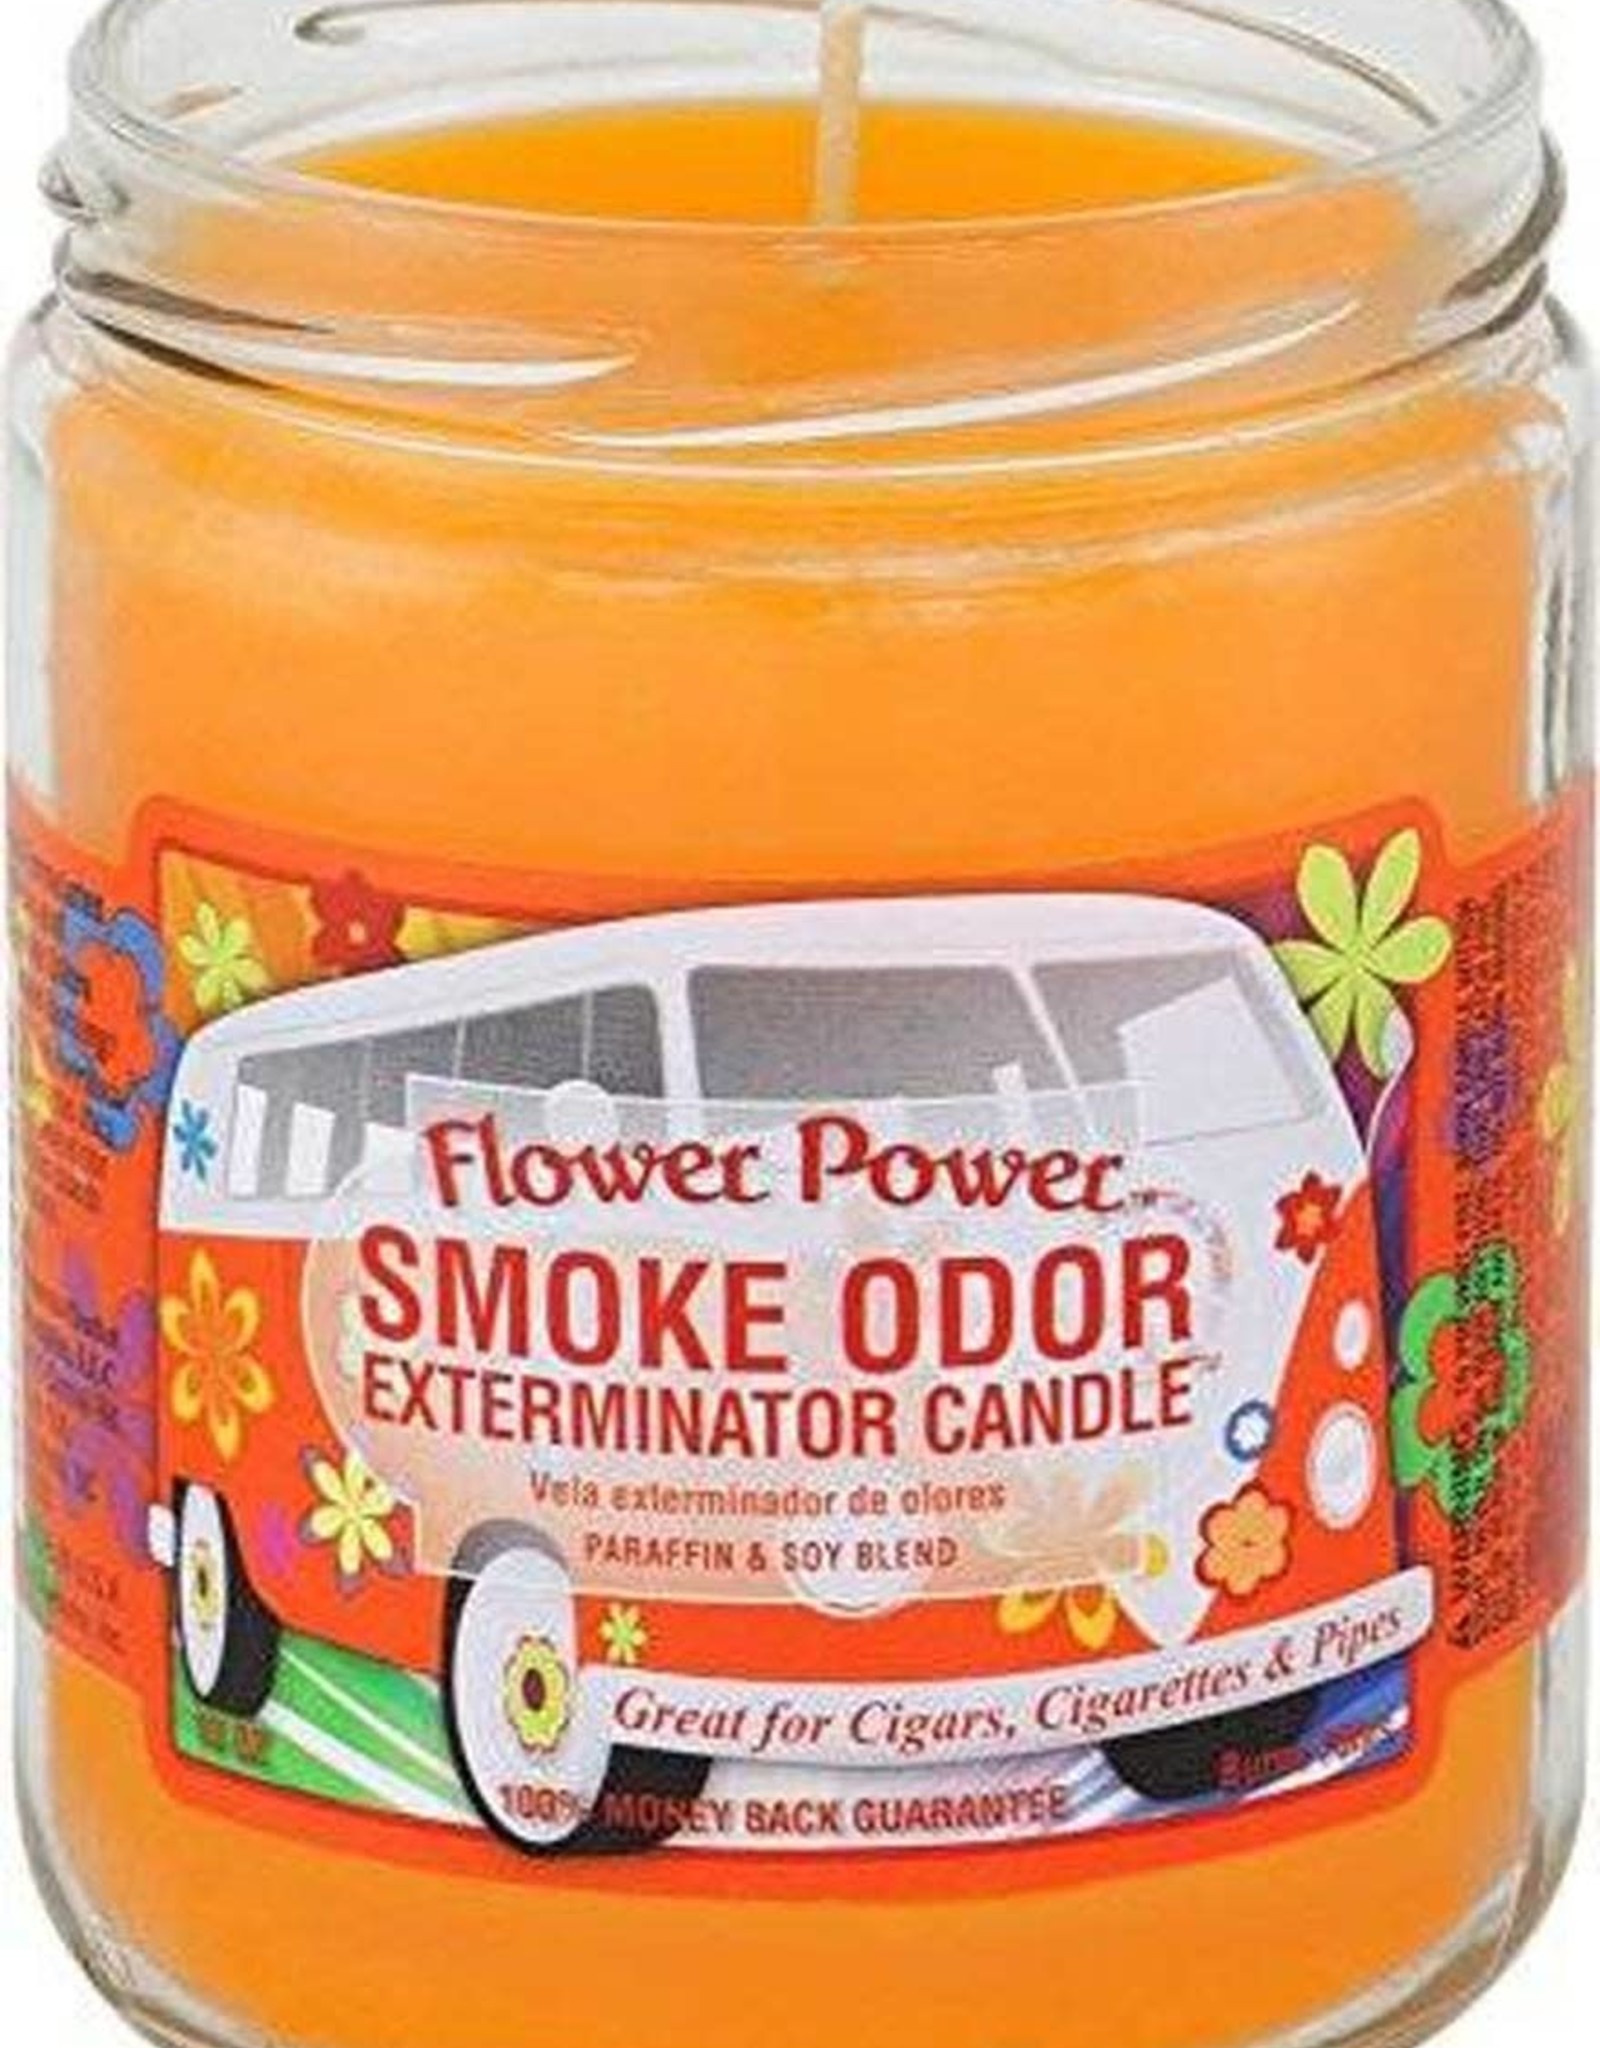 Smoke Odor Smoke Odor 13oz. Candle - Flower Power